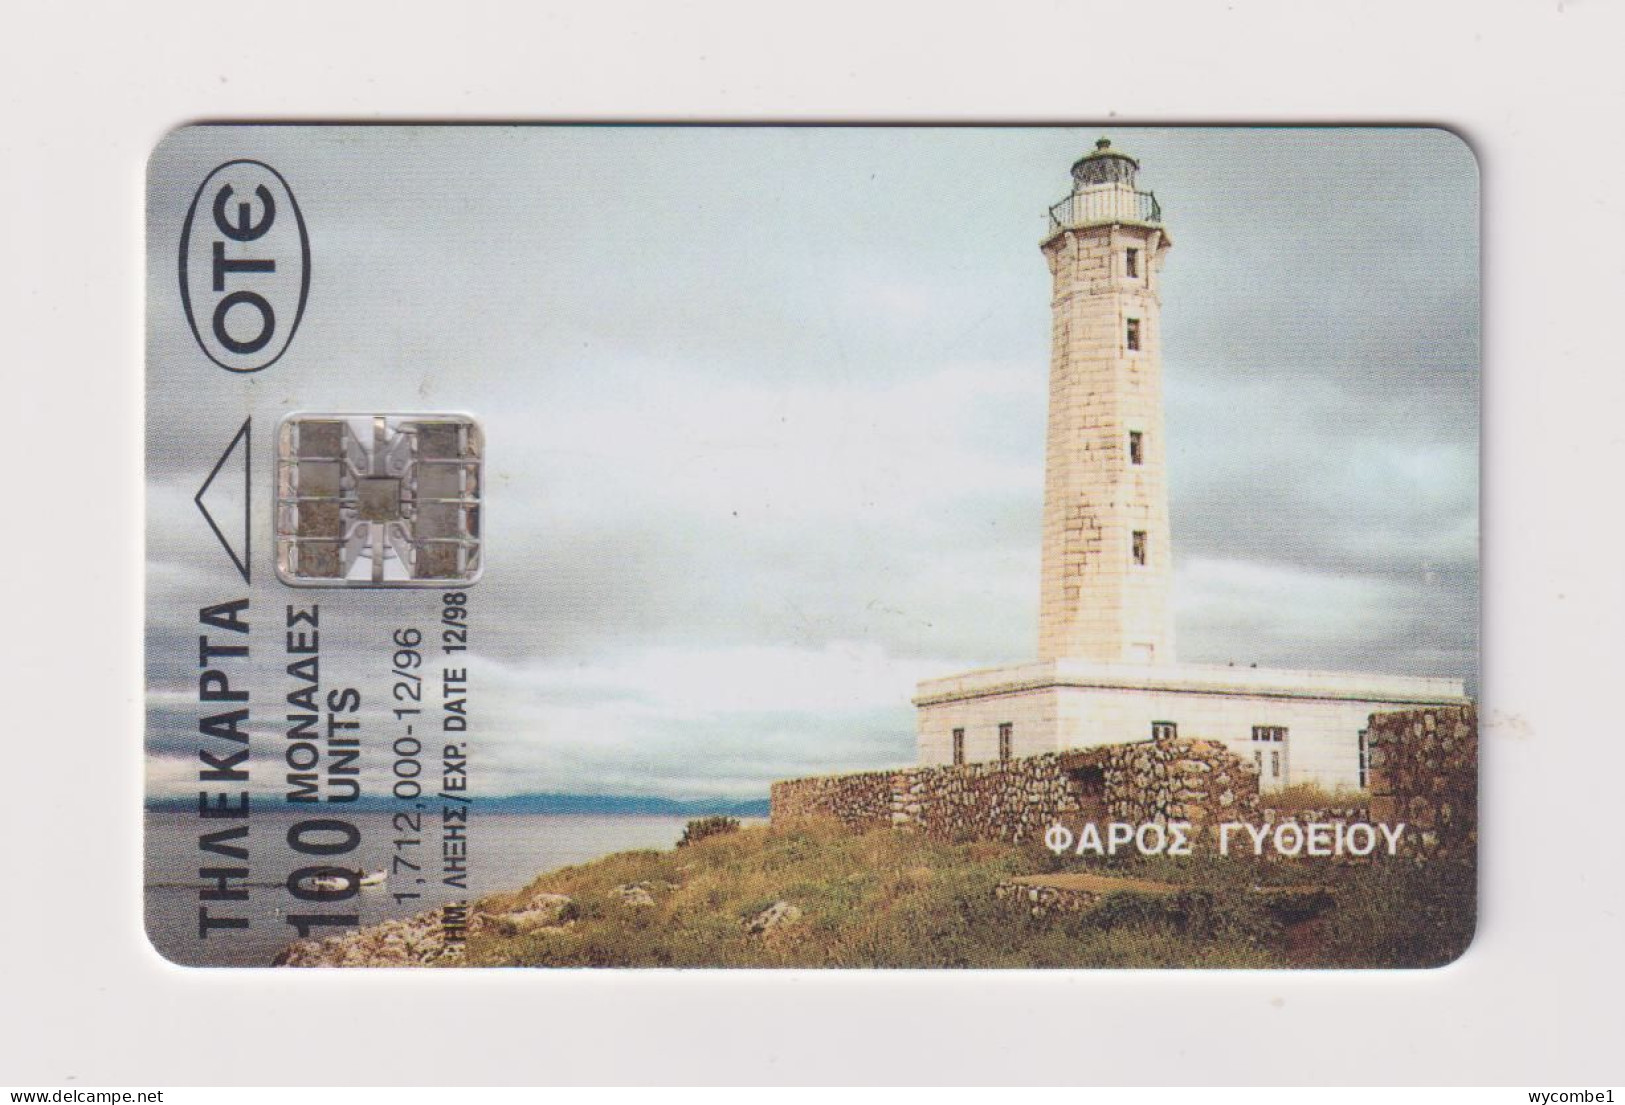 GREECE -  Lighthouse Chip  Phonecard - Greece